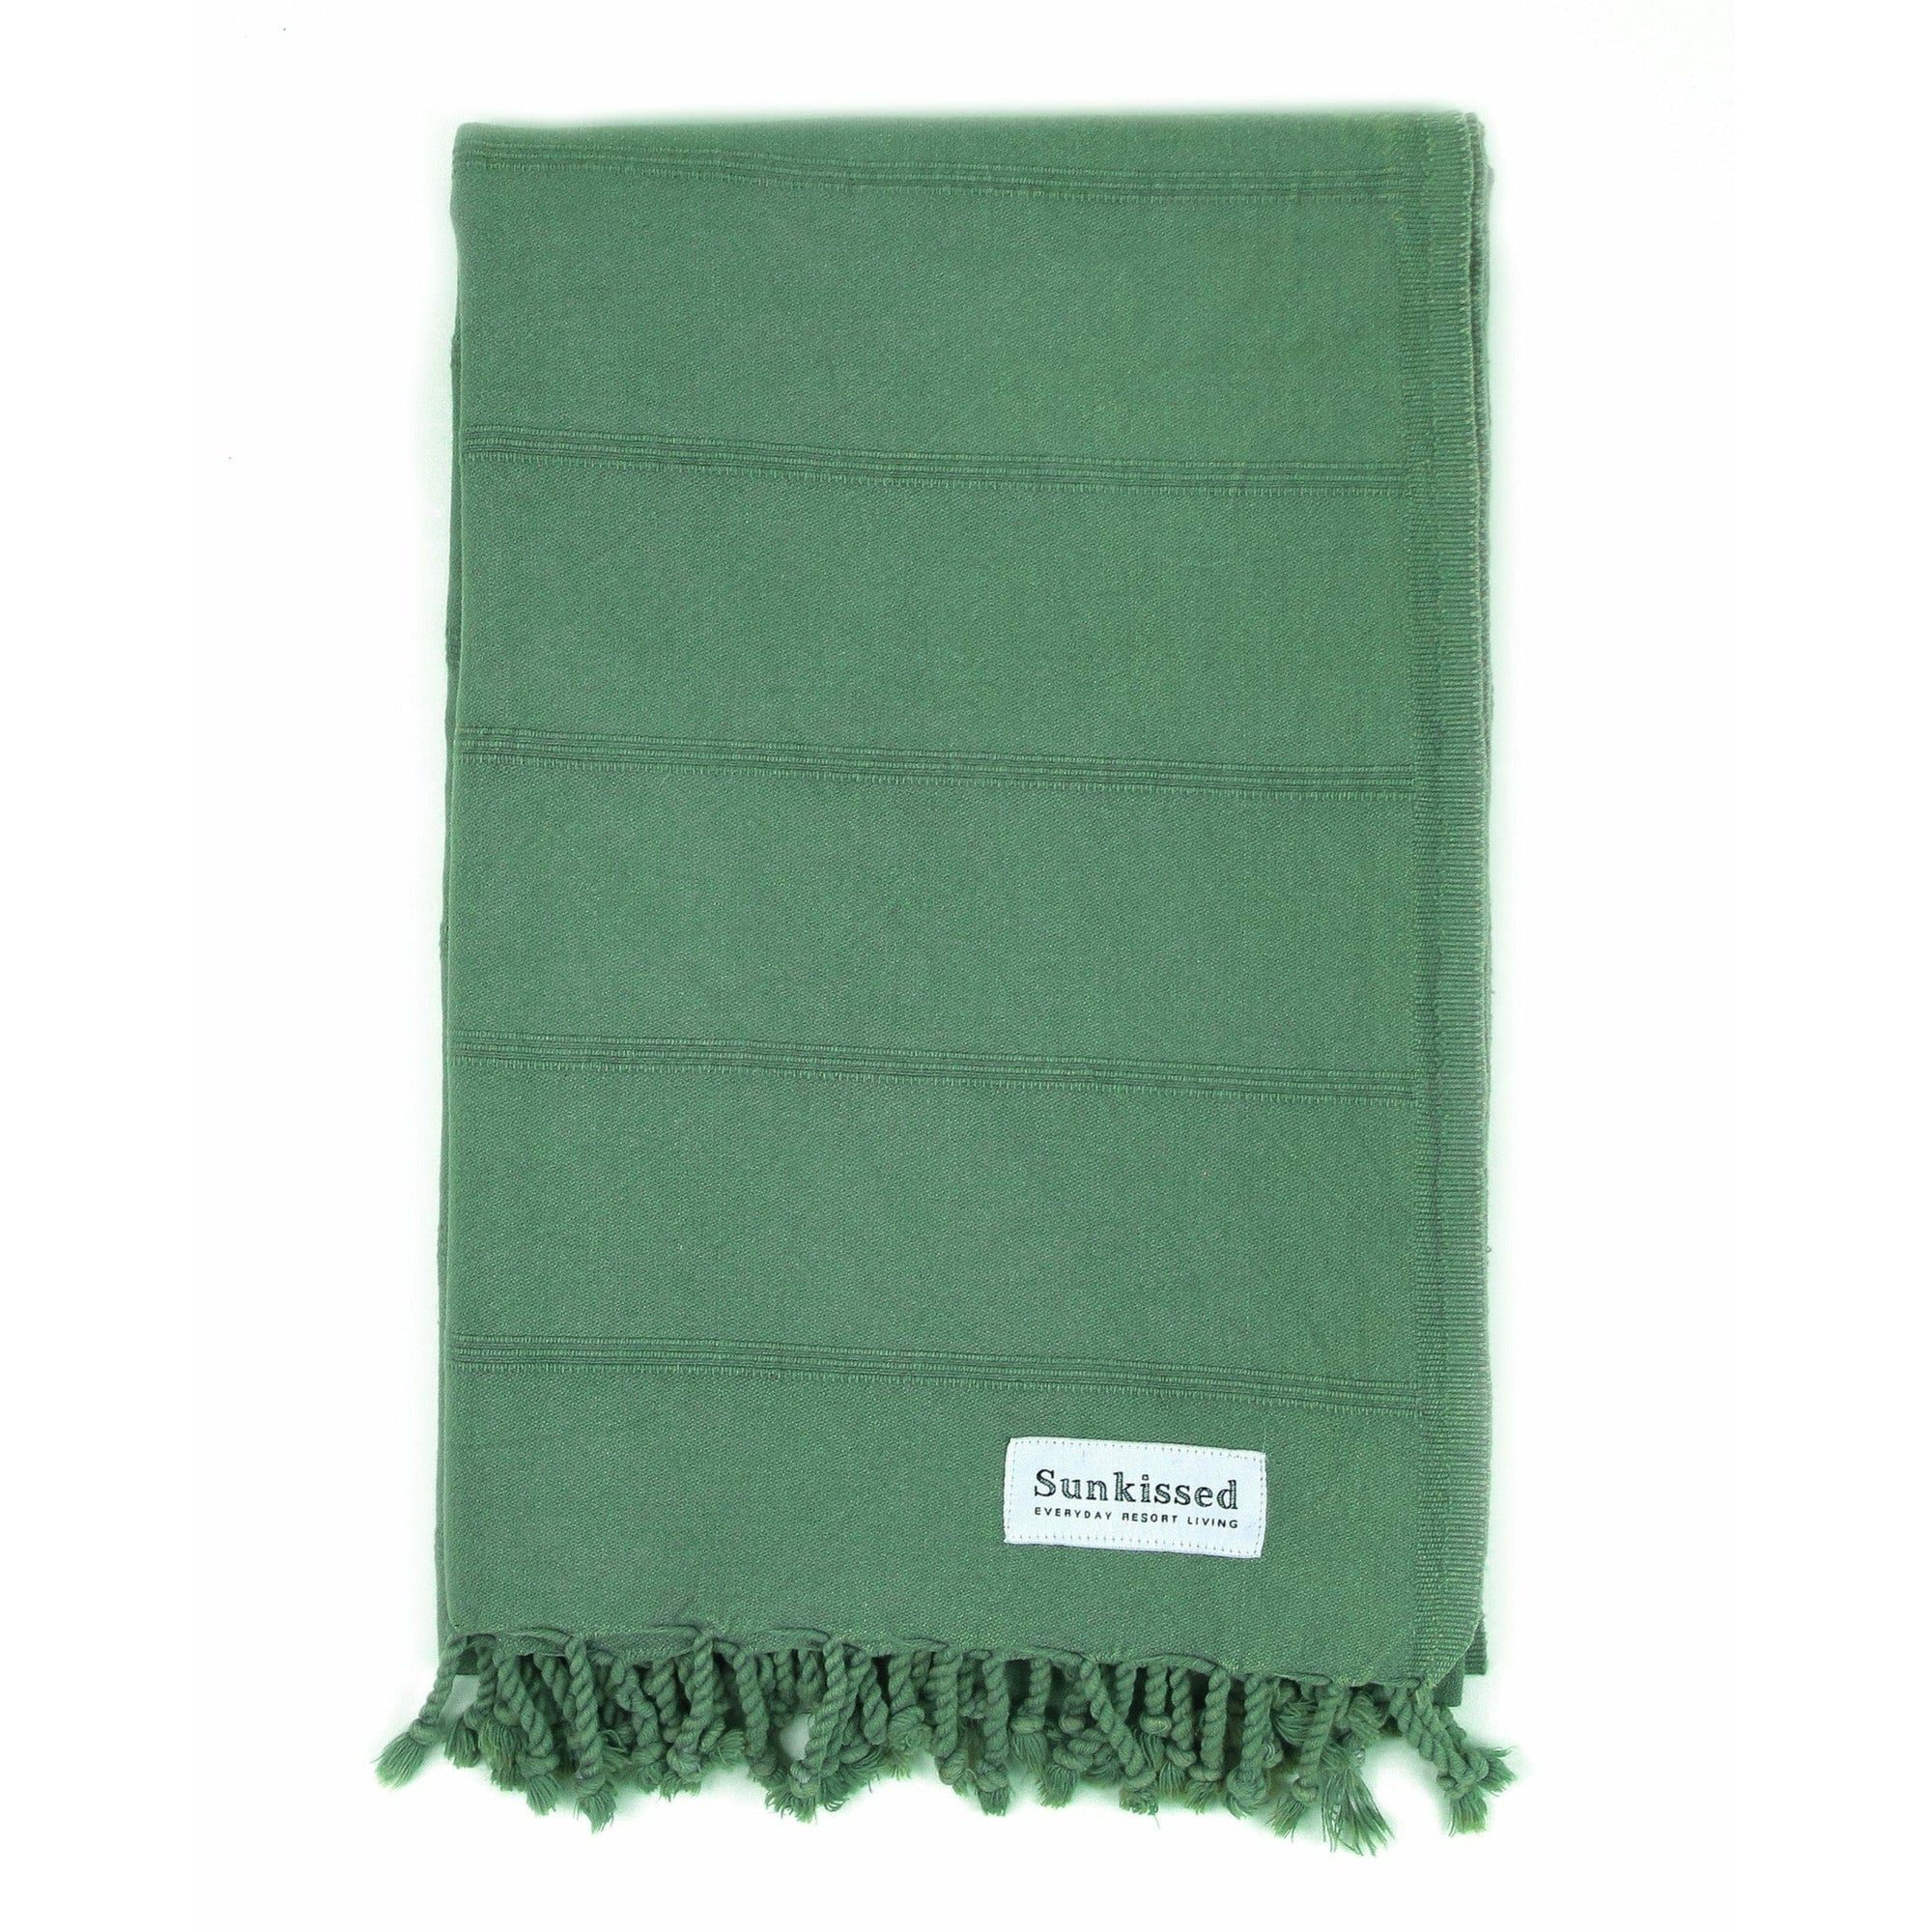 Sunkissed English Green / L • 100cm x 180cm • 40"W x 72"L Tenerife • Sand Free Beach Towel by Sunkissed